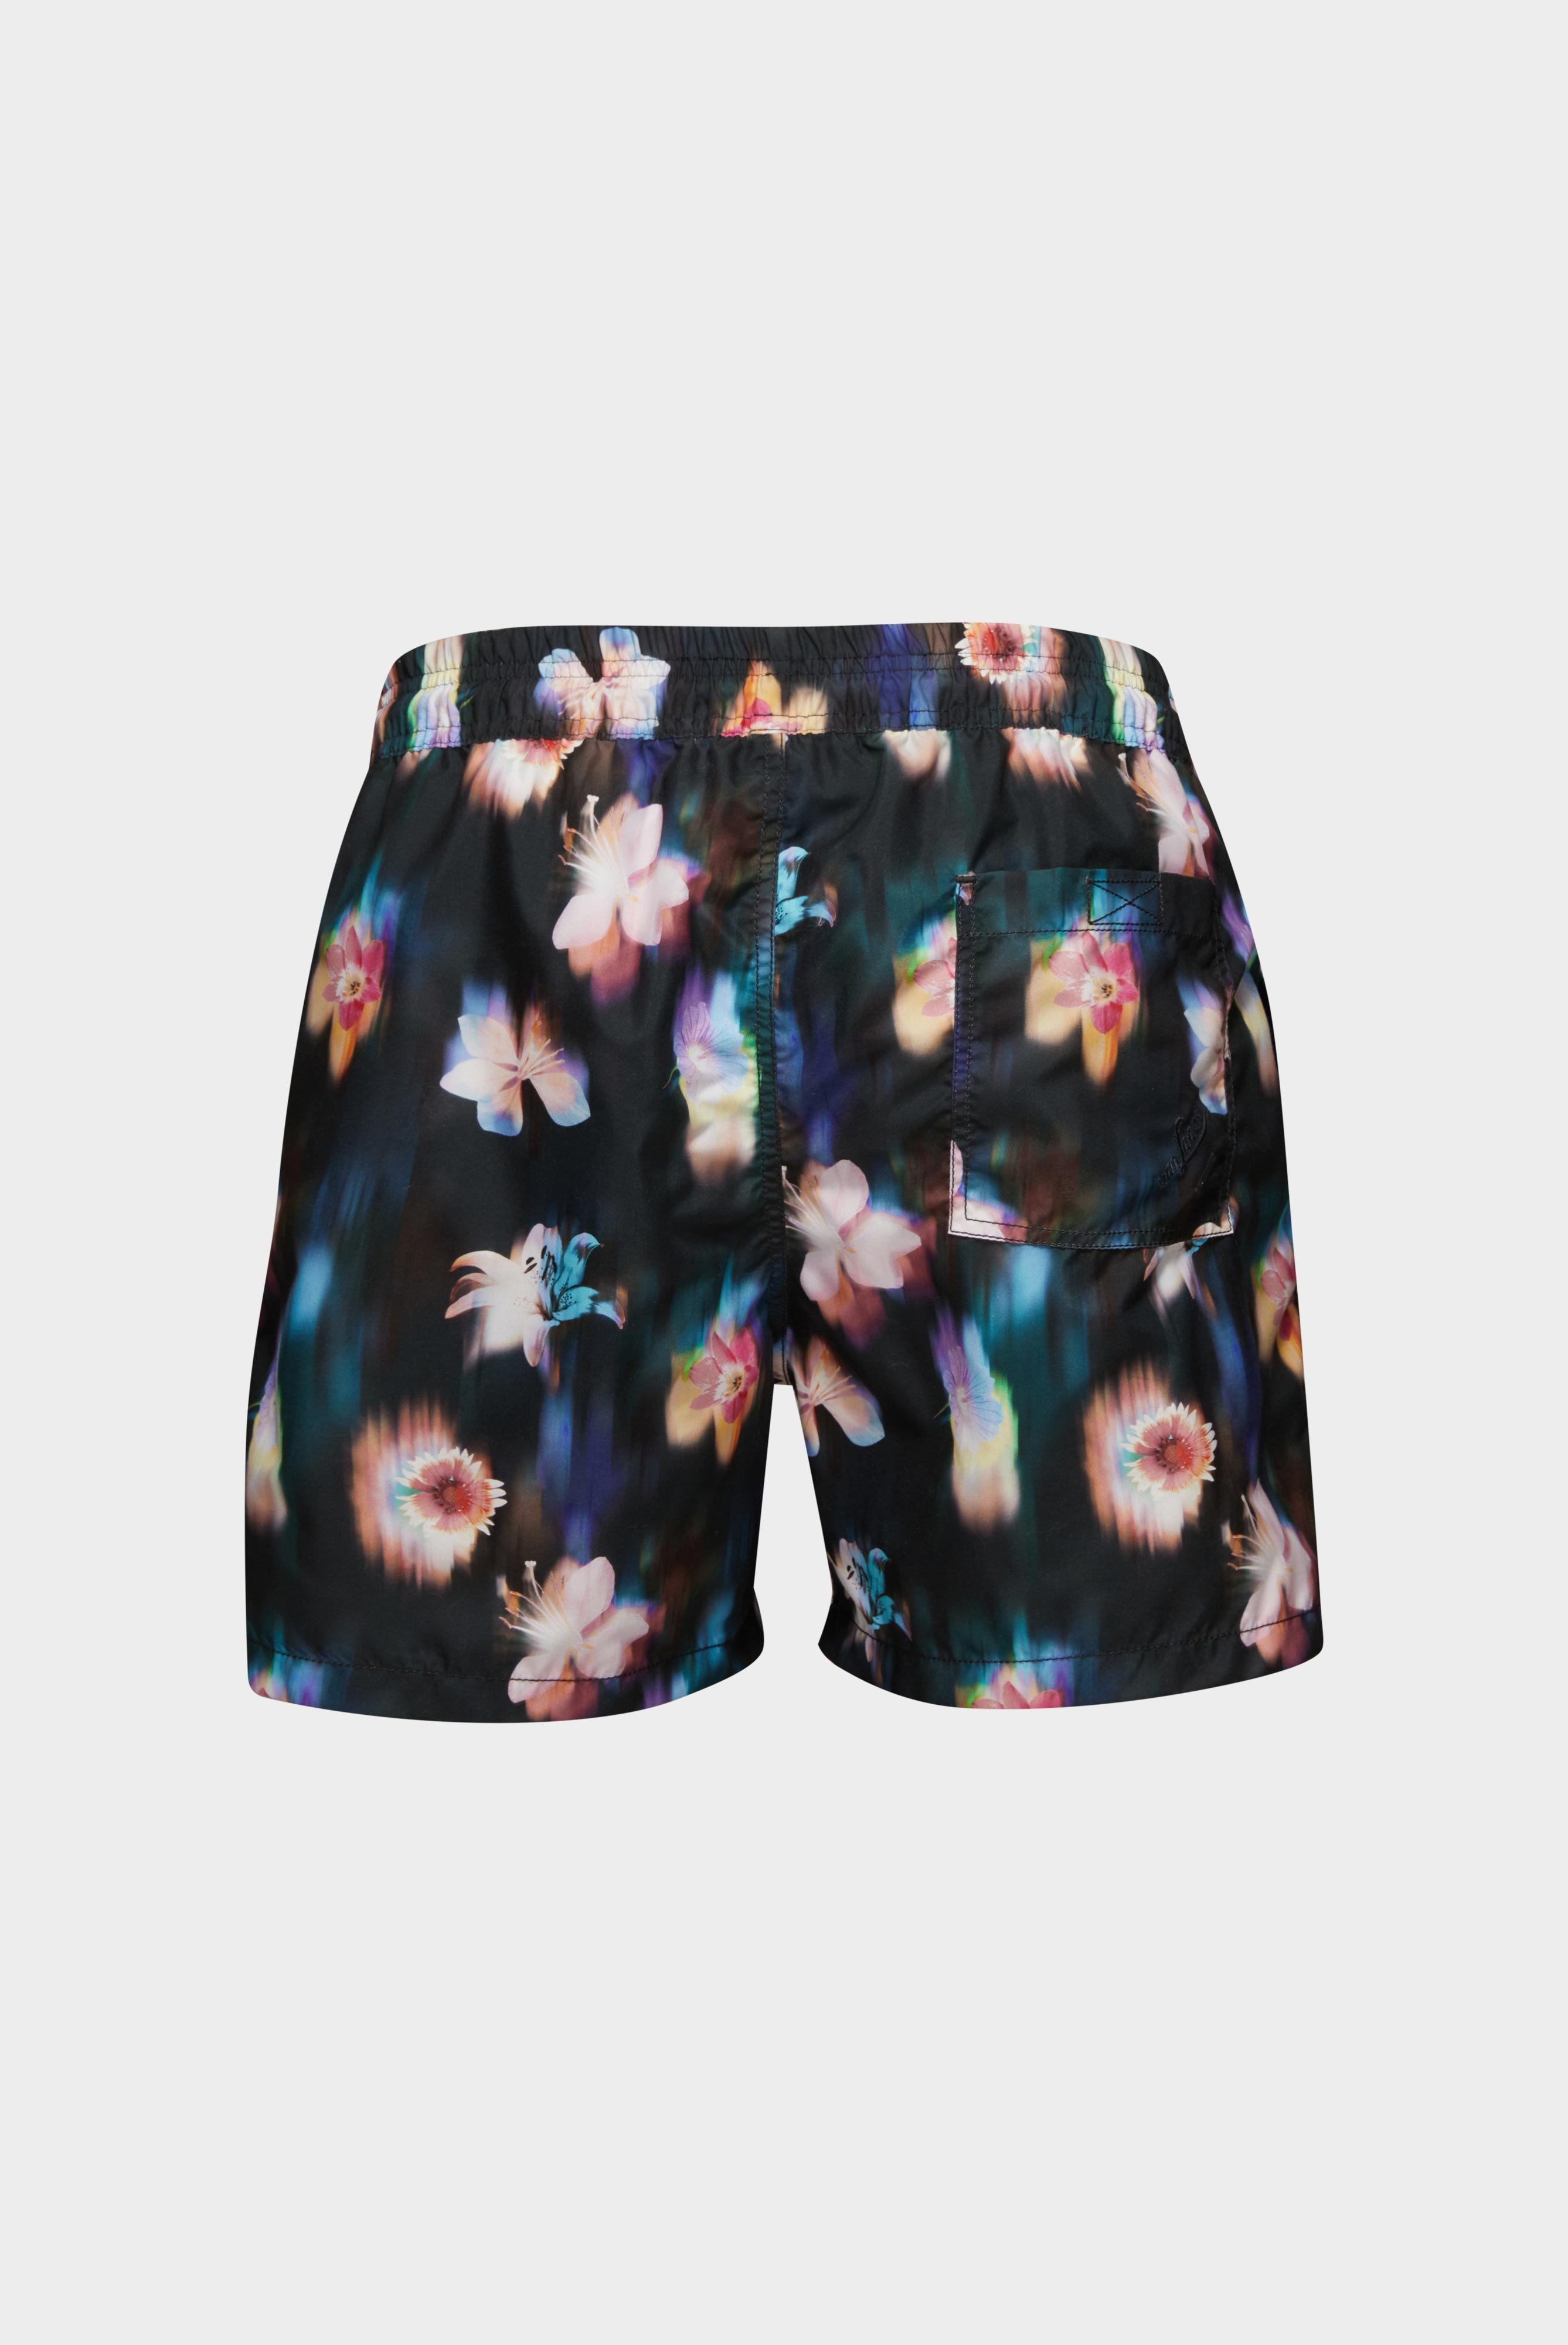 Swimwear+Swim Shorts with Floral Print+91.1179..170746.783.46